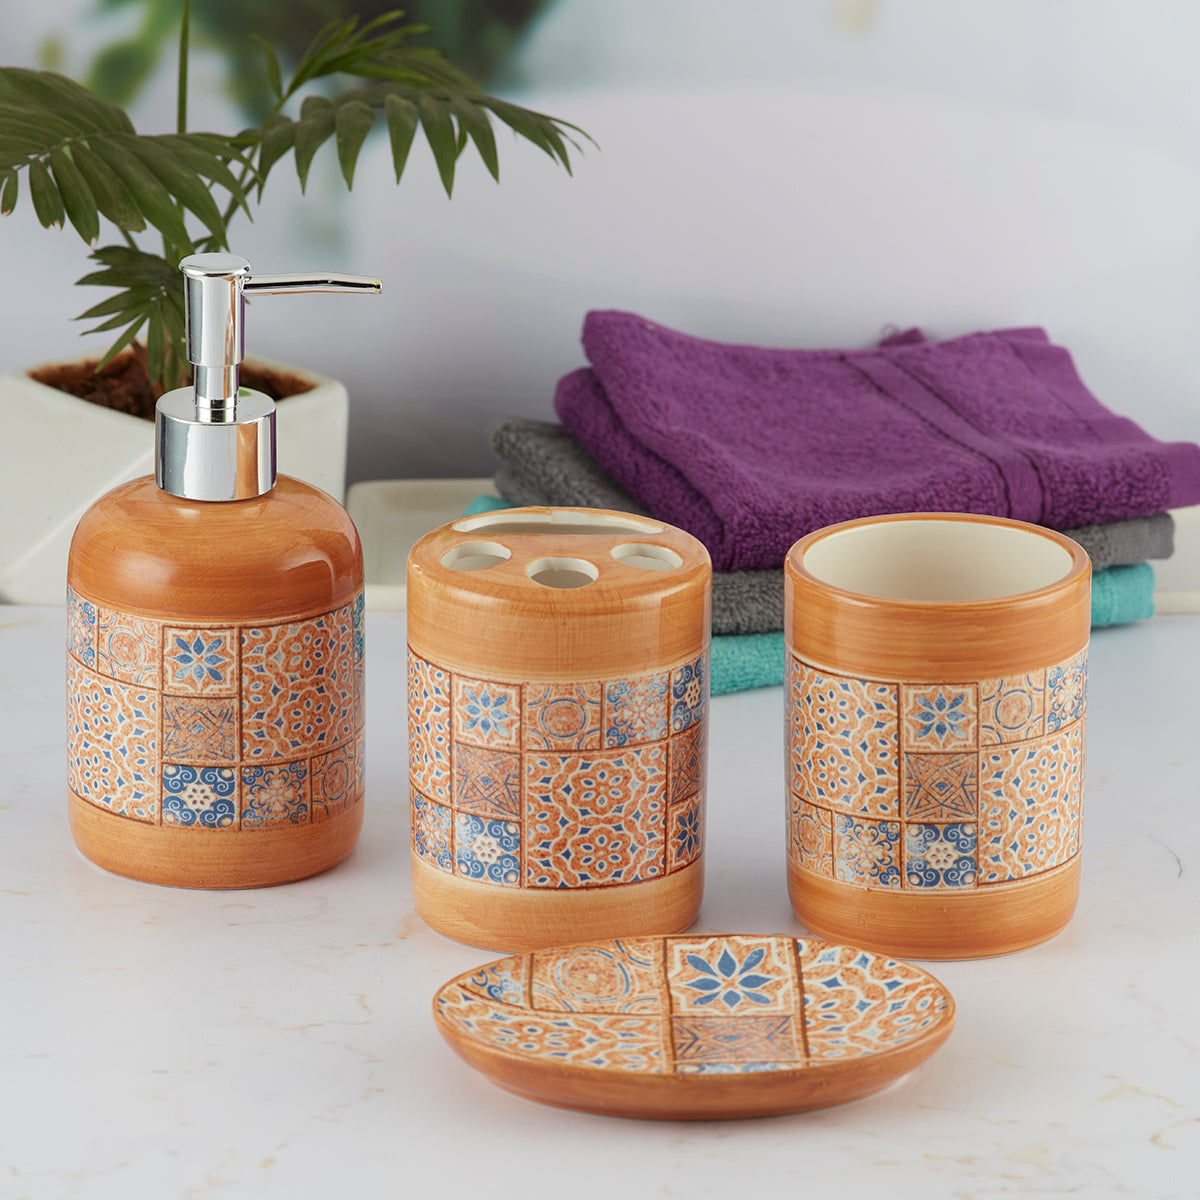 Ceramic Bathroom Accessories Set of 4 Bath Set with Soap Dispenser (9862)